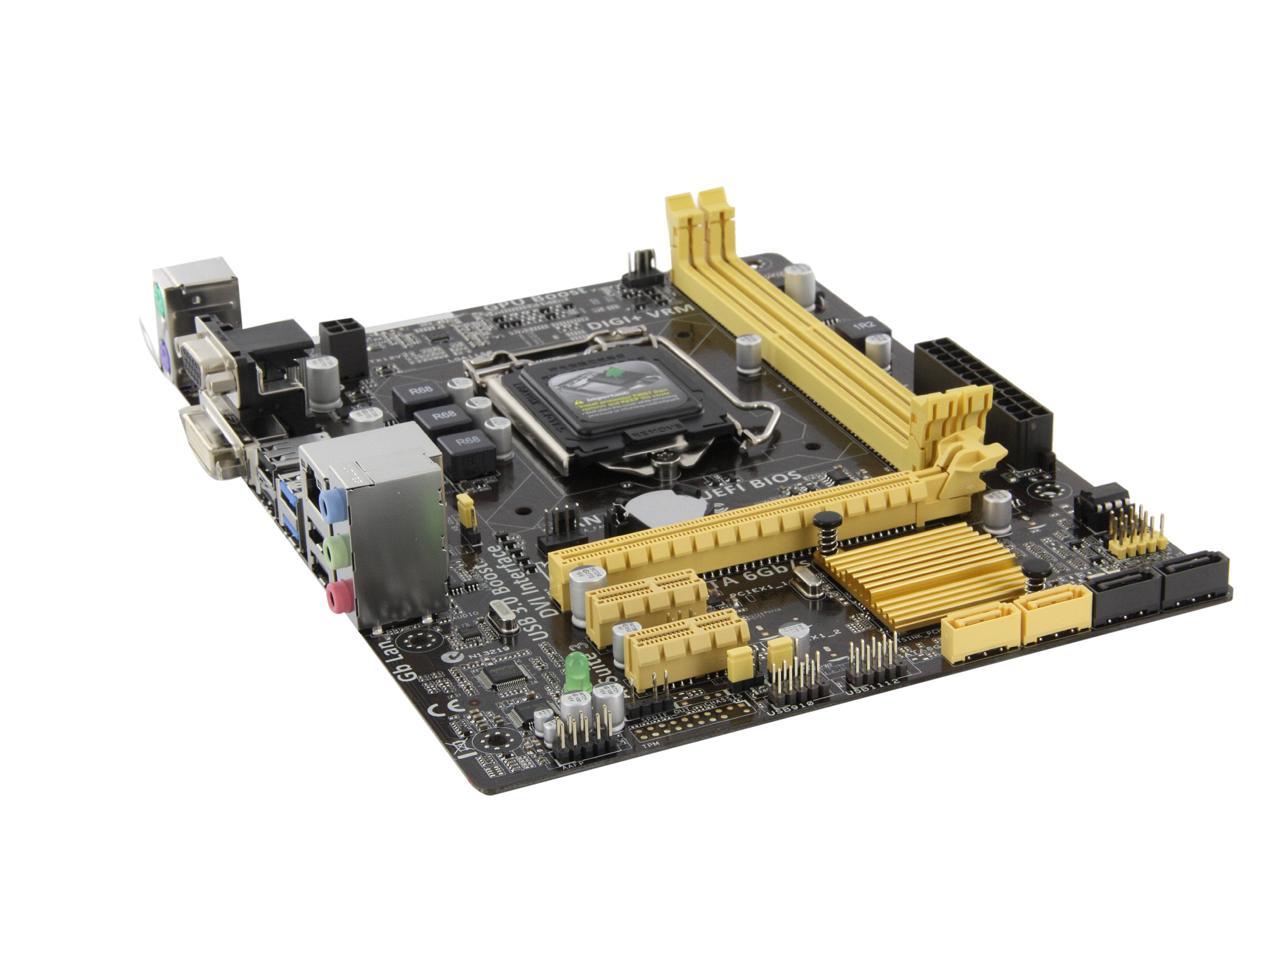 ASUS H81M-E LGA 1150 Intel H81 SATA 6Gb/s USB 3.1 uATX Intel Motherboard